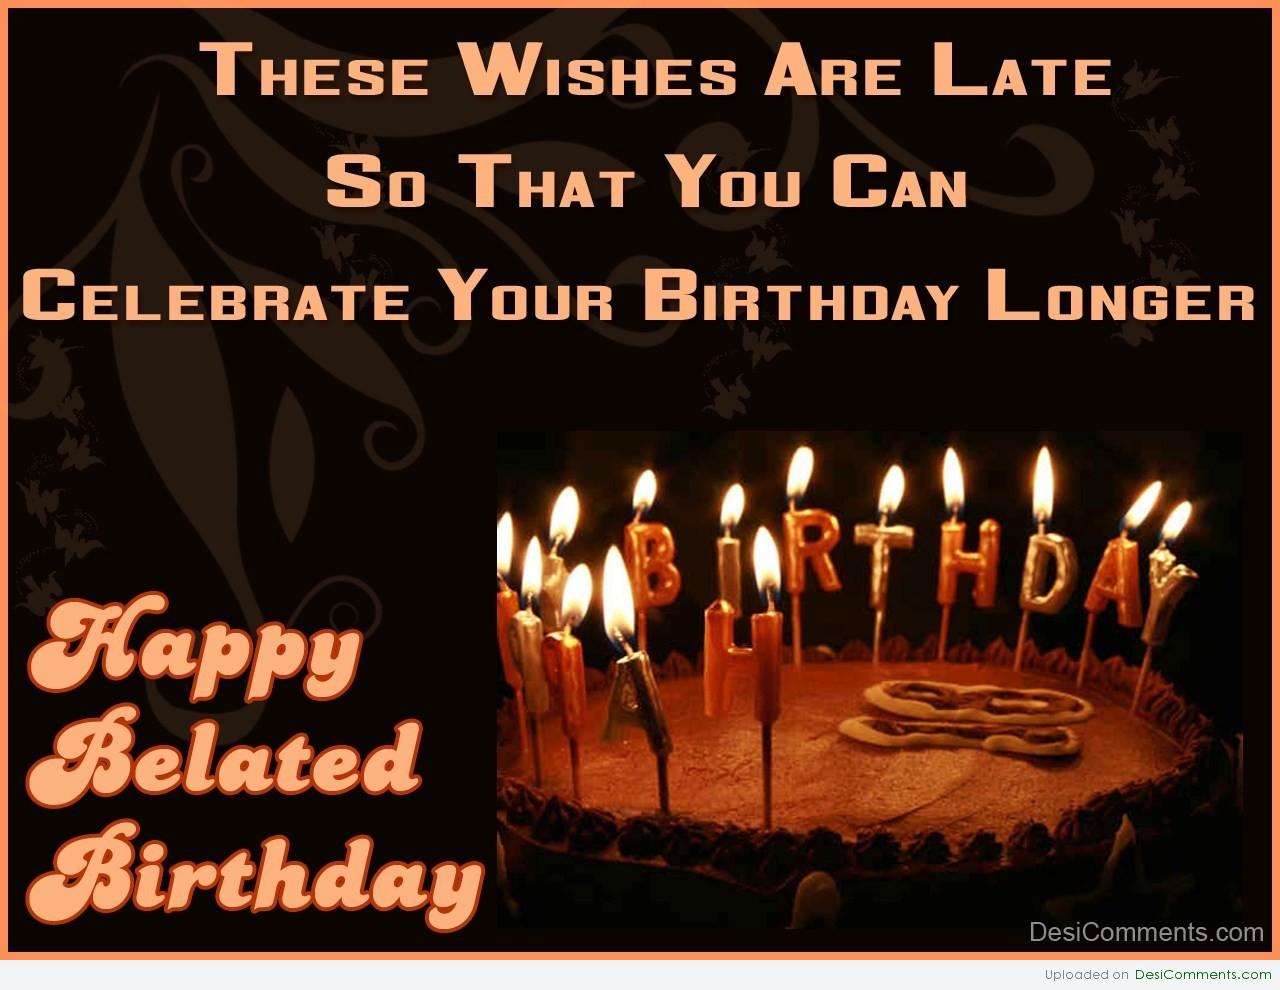 Celebrate Your Birthday Longer - DesiComments.com